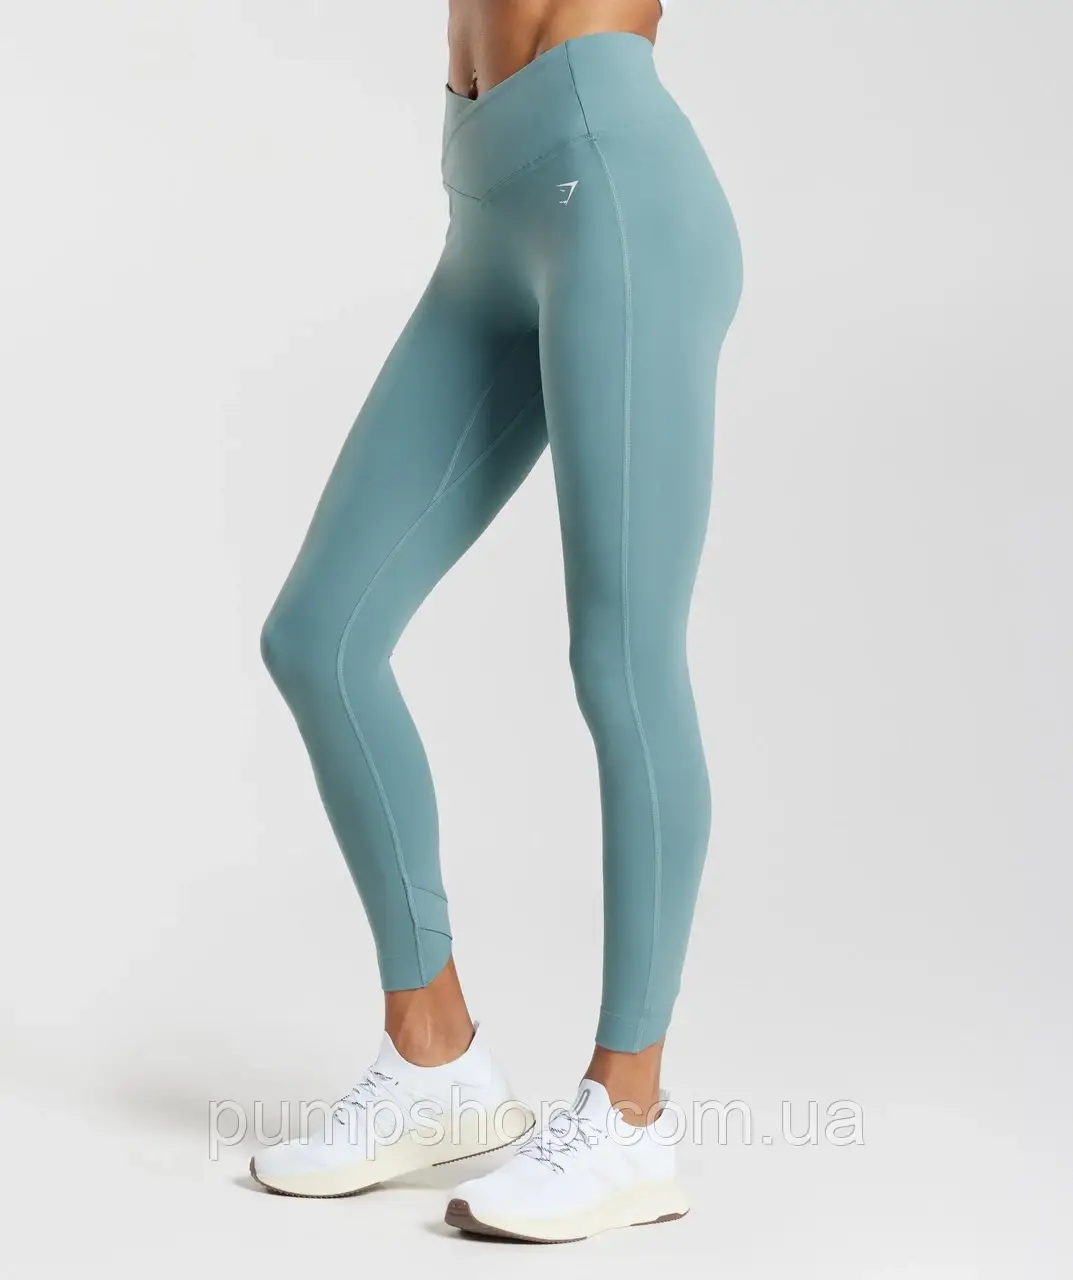 Жіночі спортивні легінси Gymshark Crossover Leggings - Thunder Blue - S, M, L, XL